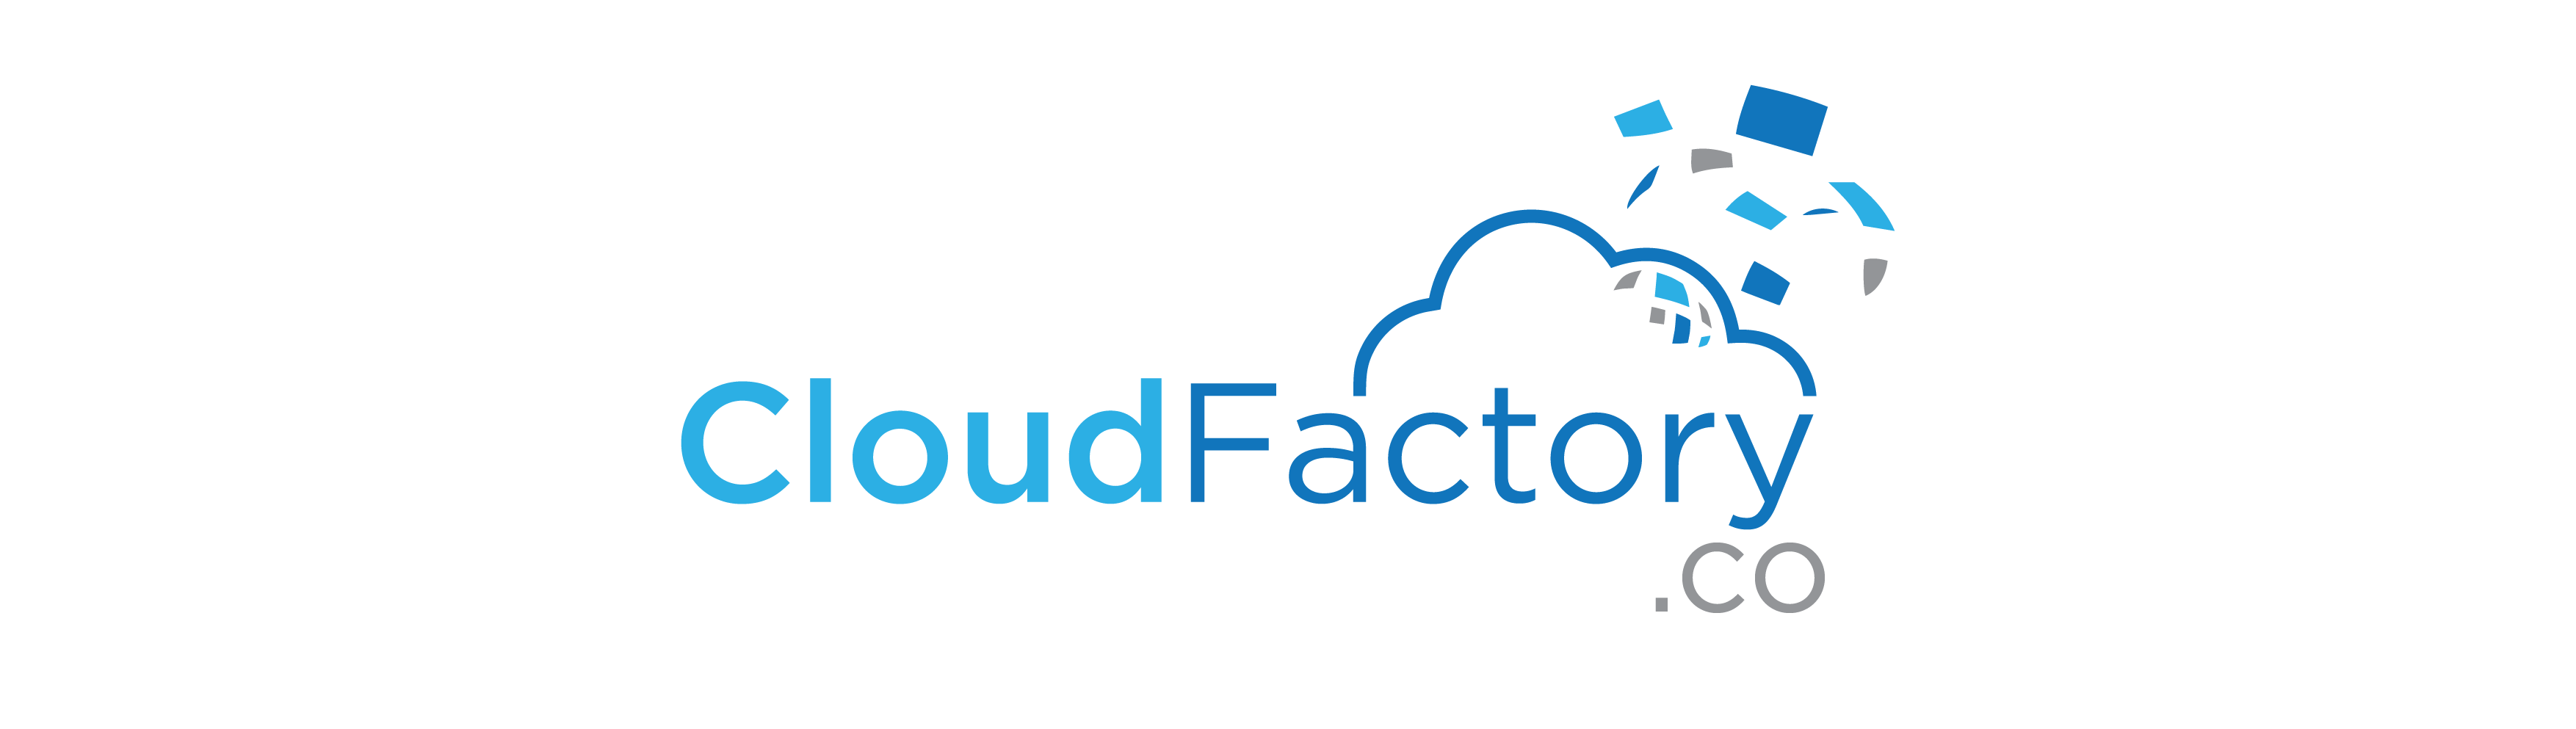 Cloud Factory Logo White BG 01